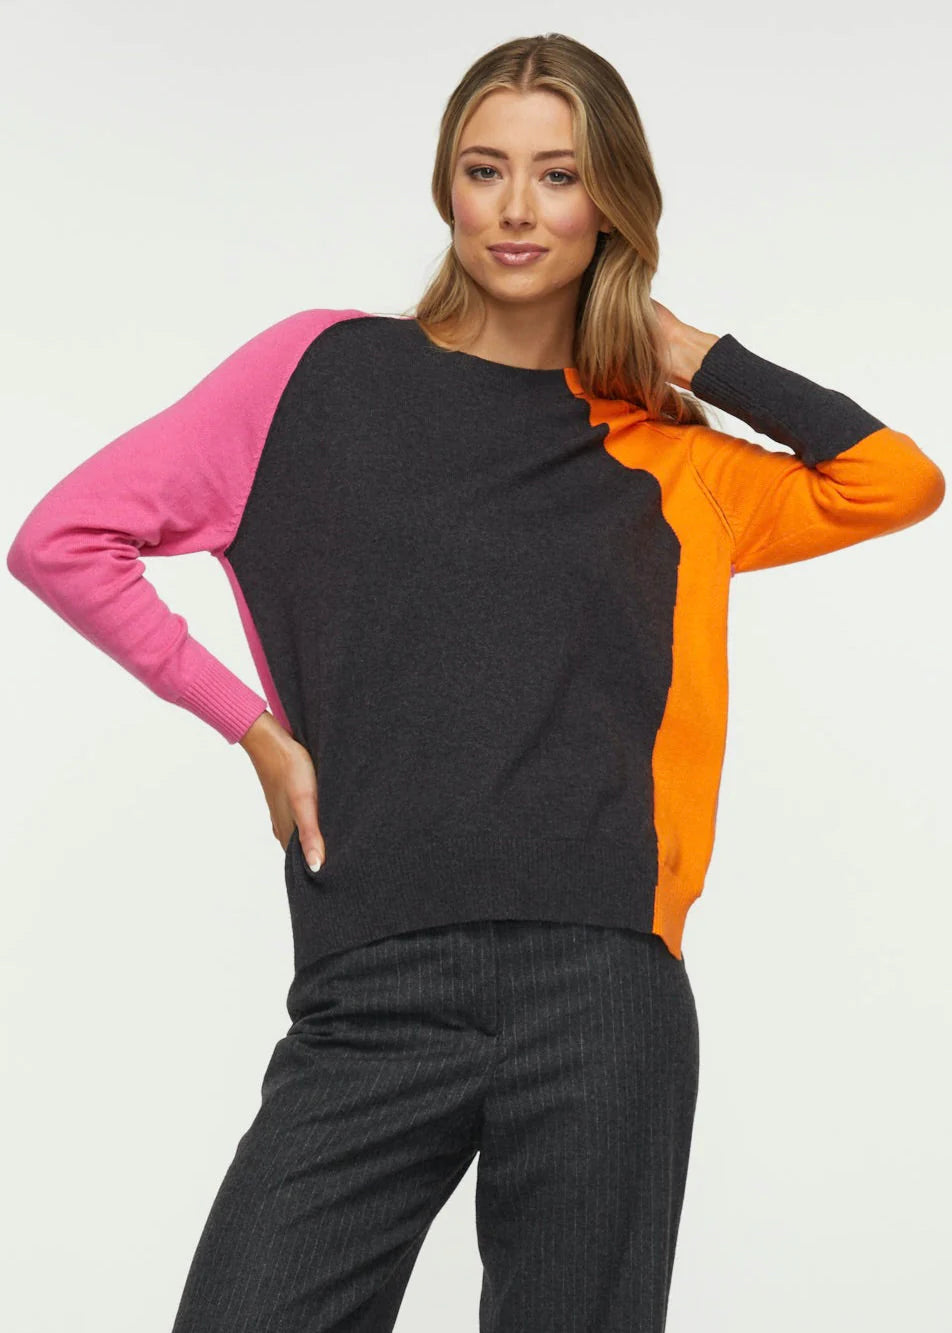 Zaket & Plover Color Block Sleeve Sweater-Charcoal ZP5332U